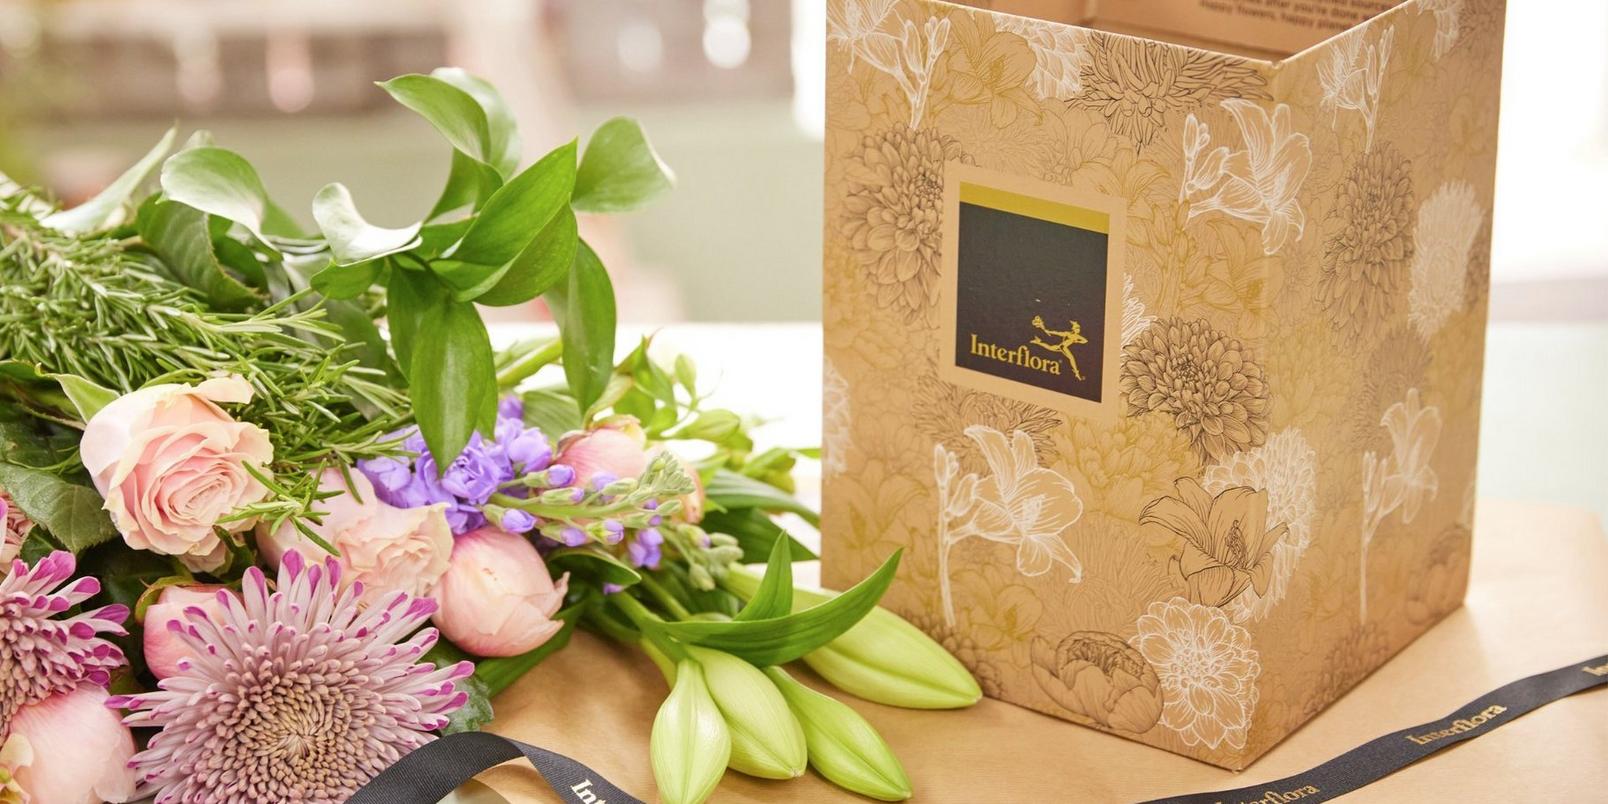 Interflora-signature-presentation-box-with-flowers